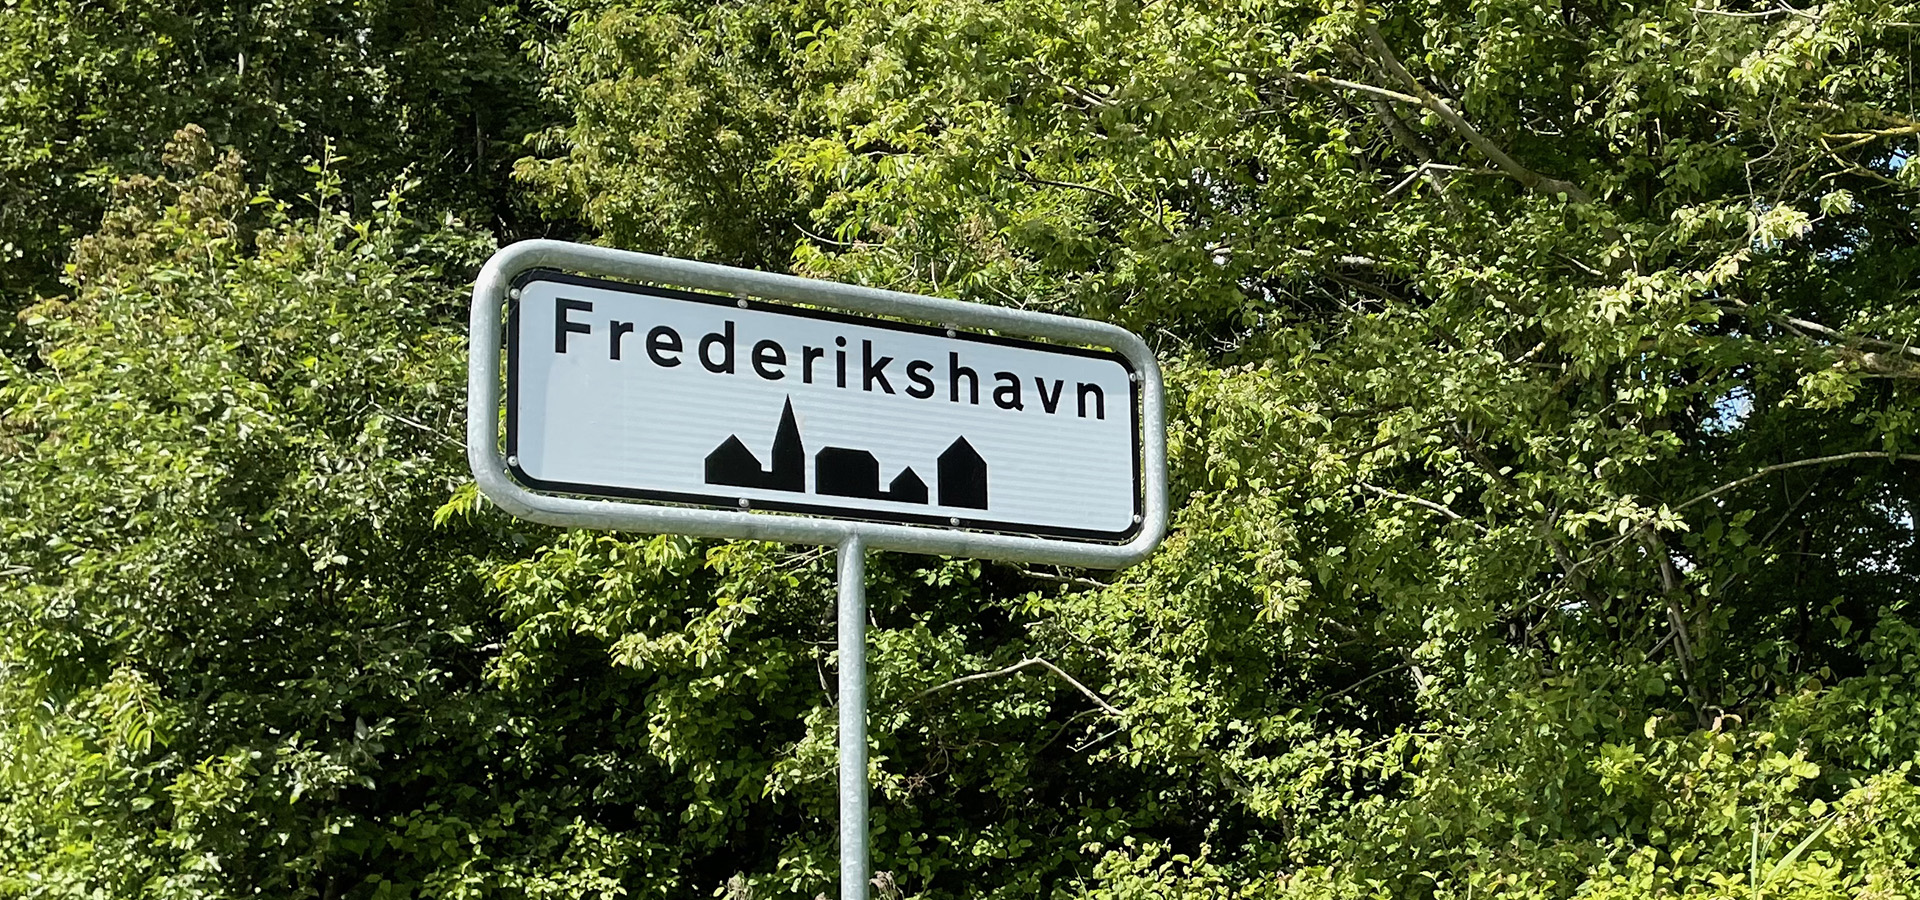 Frederikshavn haveservice